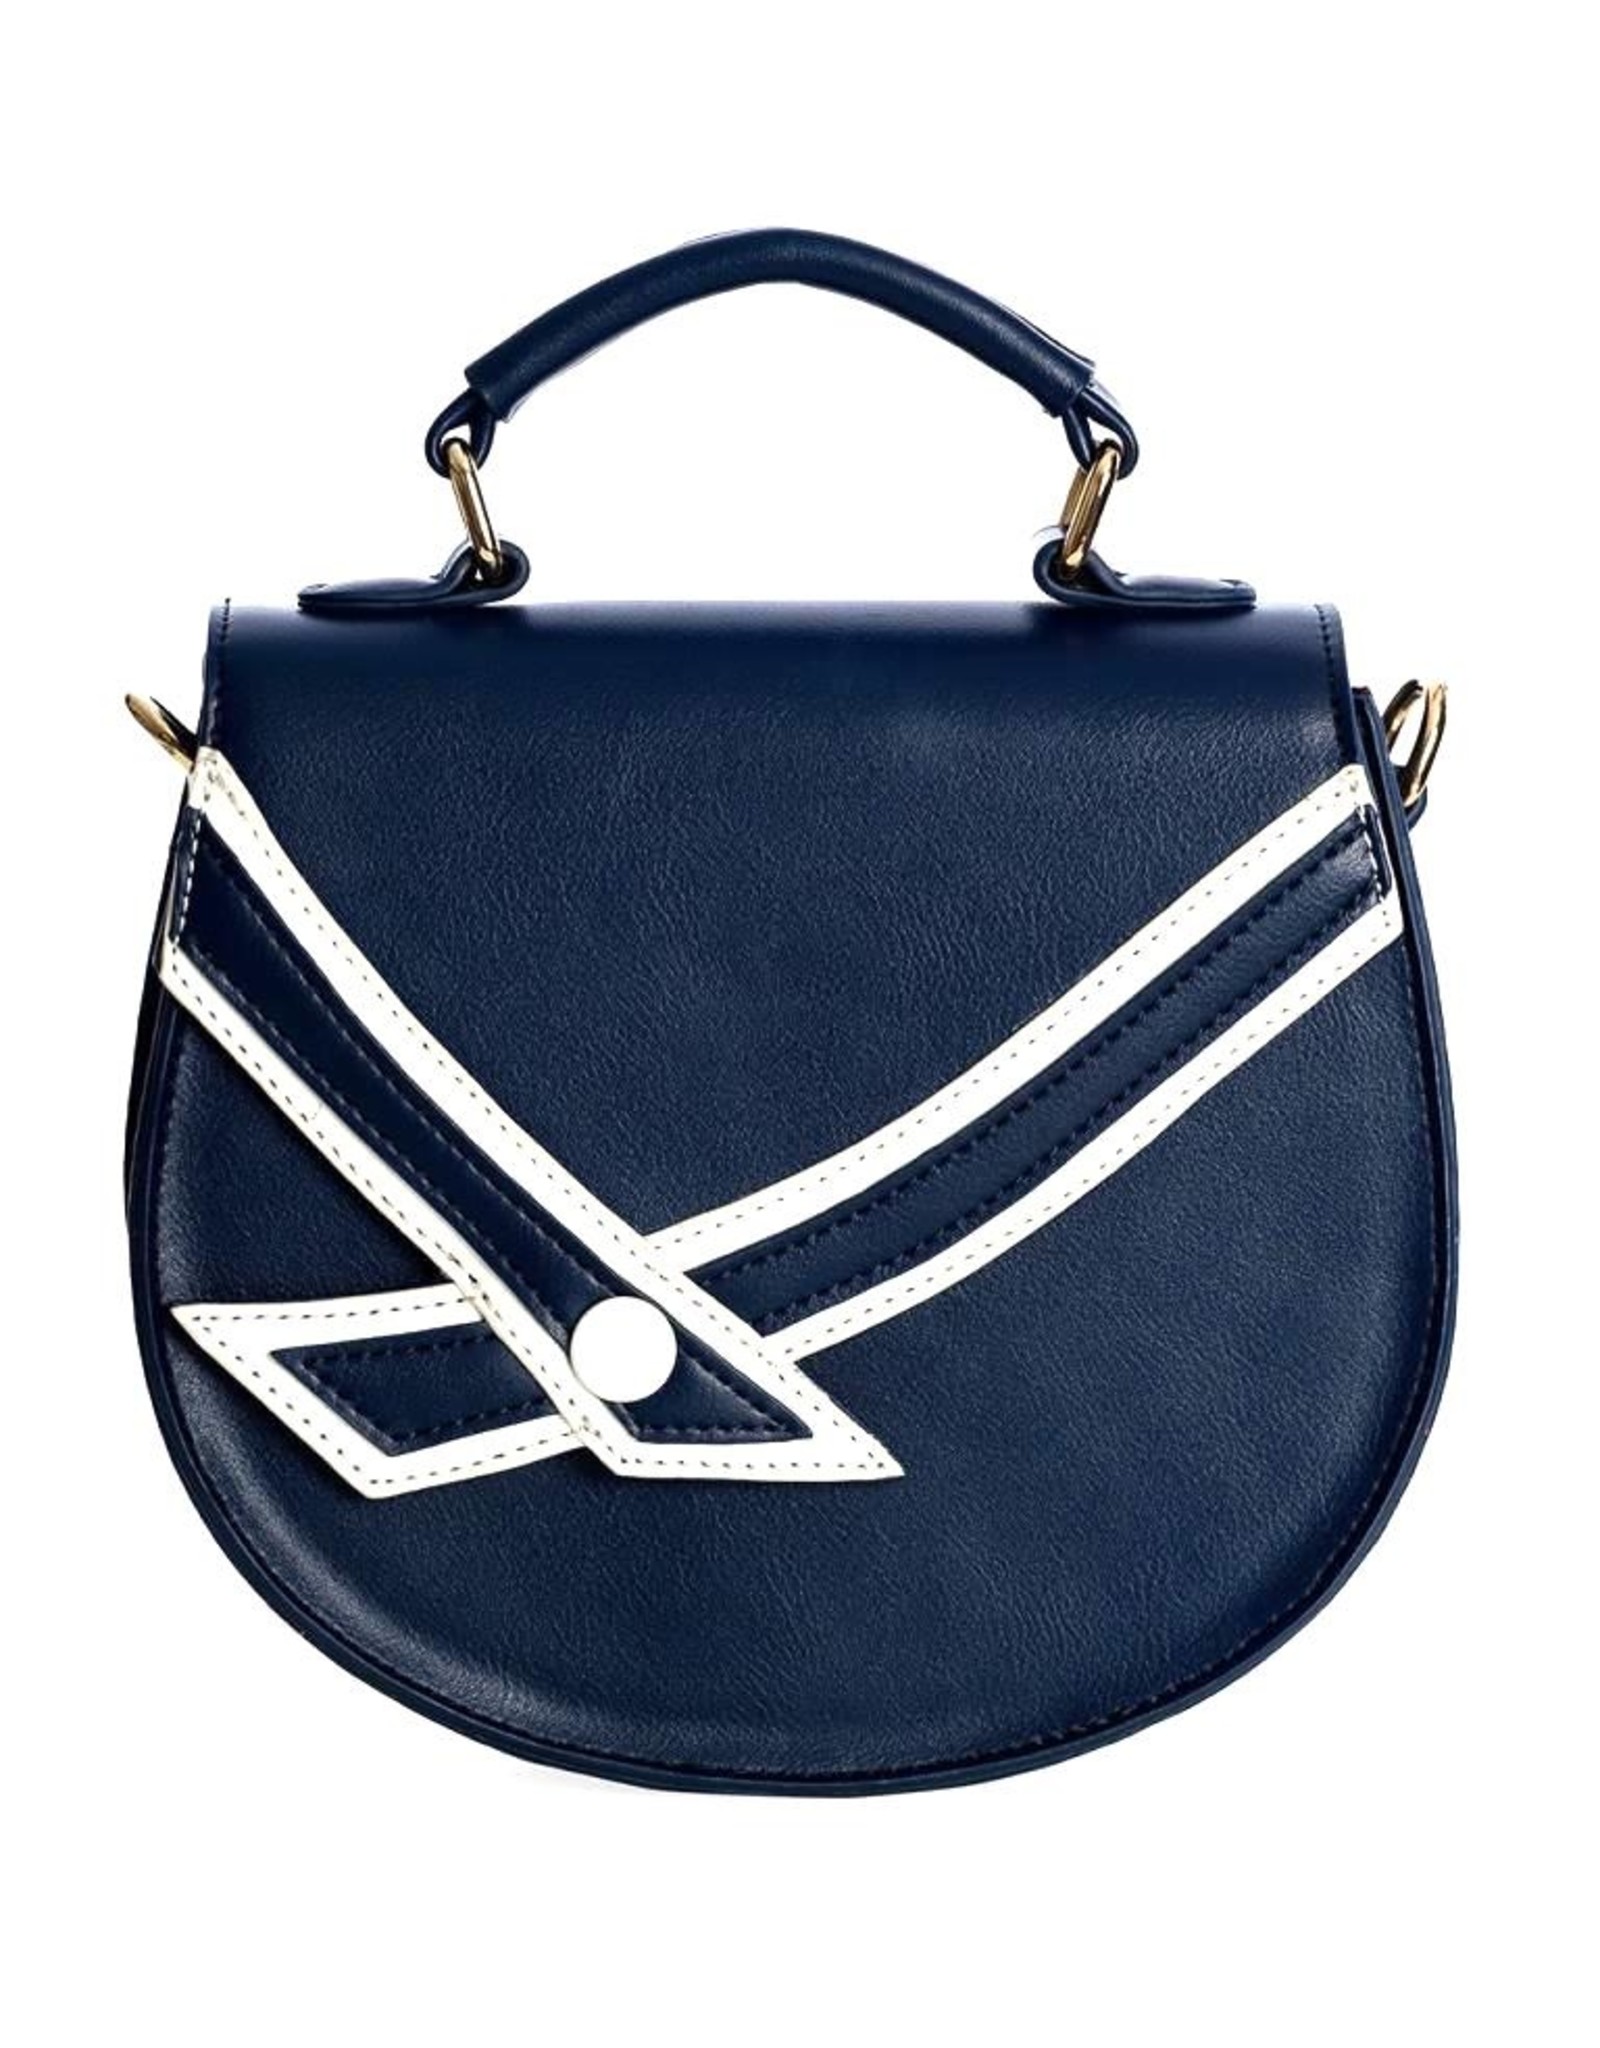 Banned Vintage bags Retro Bags - Banned Nautical Kelly Lee Handbag Navy